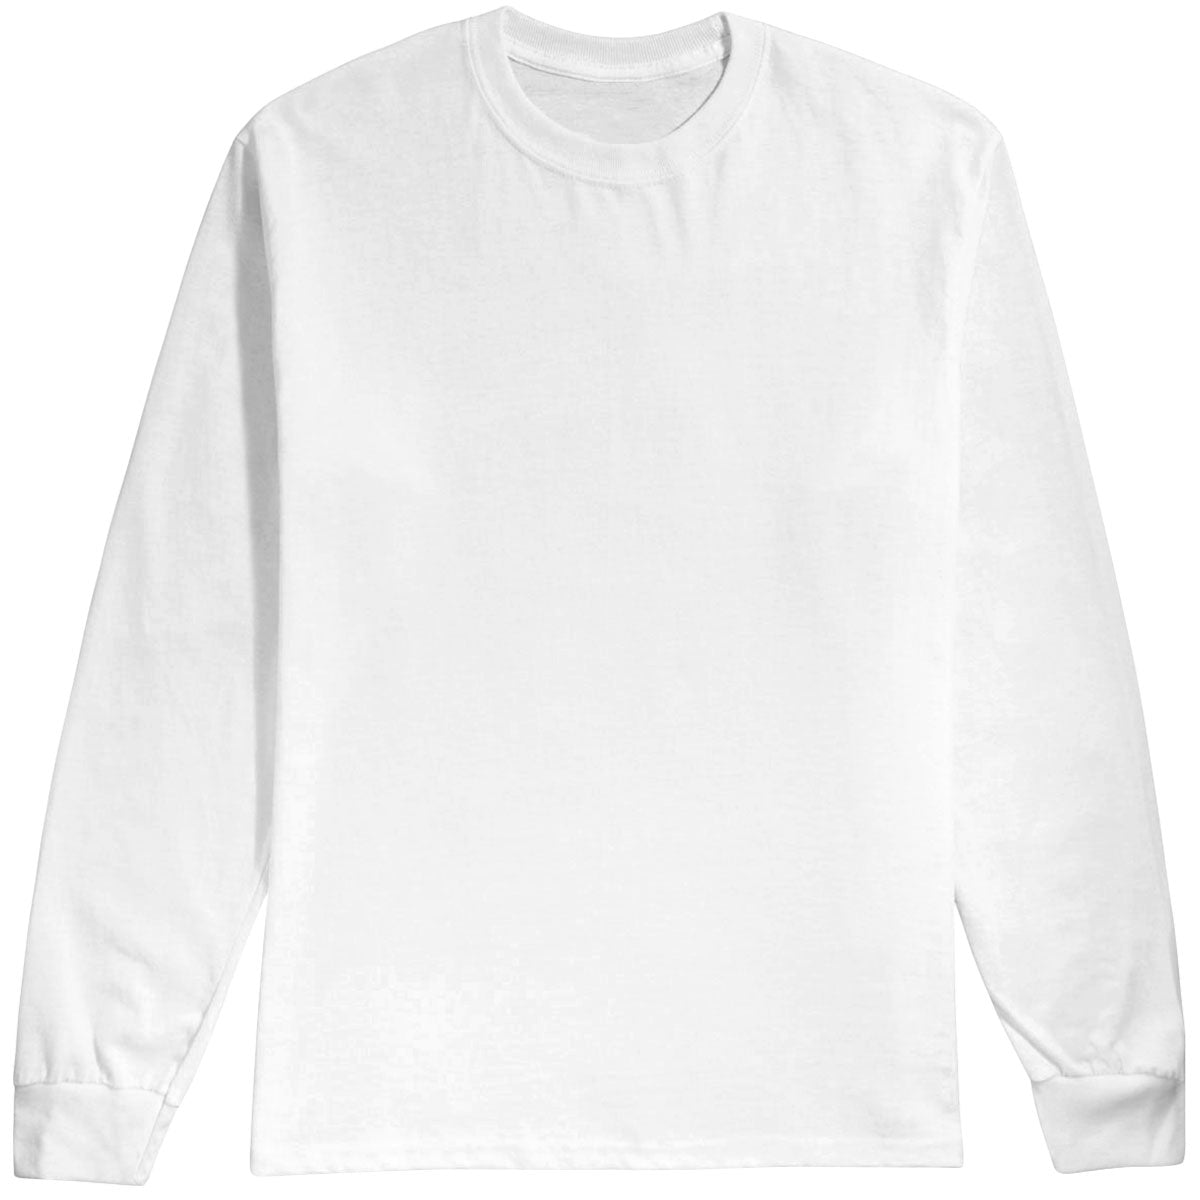 Habitat Bear Long Sleeve T-Shirt  - White - LG image 1